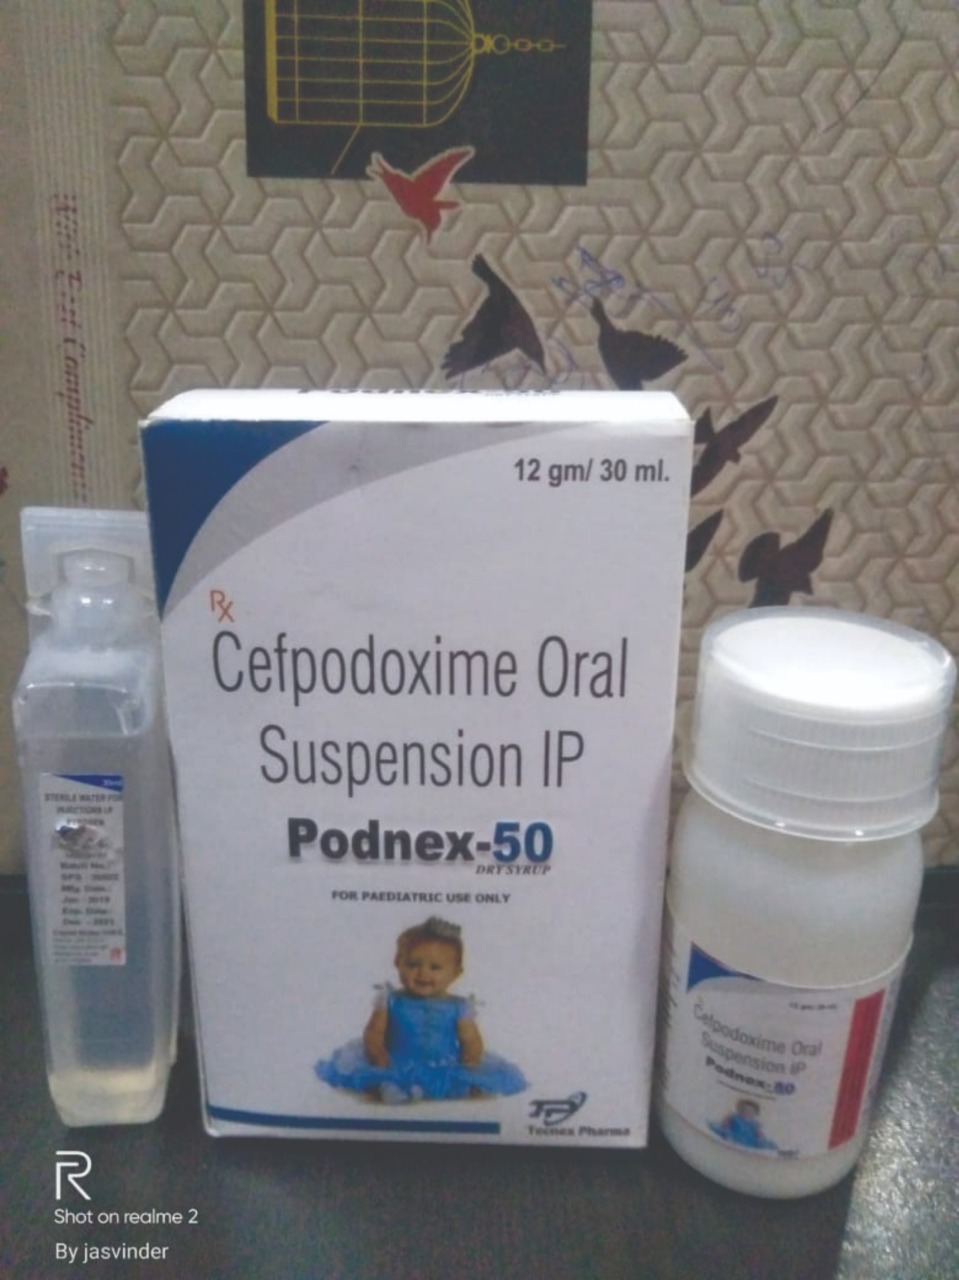 Product Name: PODNEX 50, Compositions of PODNEX 50 are Cefpodoxime Oral Suspension IP - Tecnex Pharma